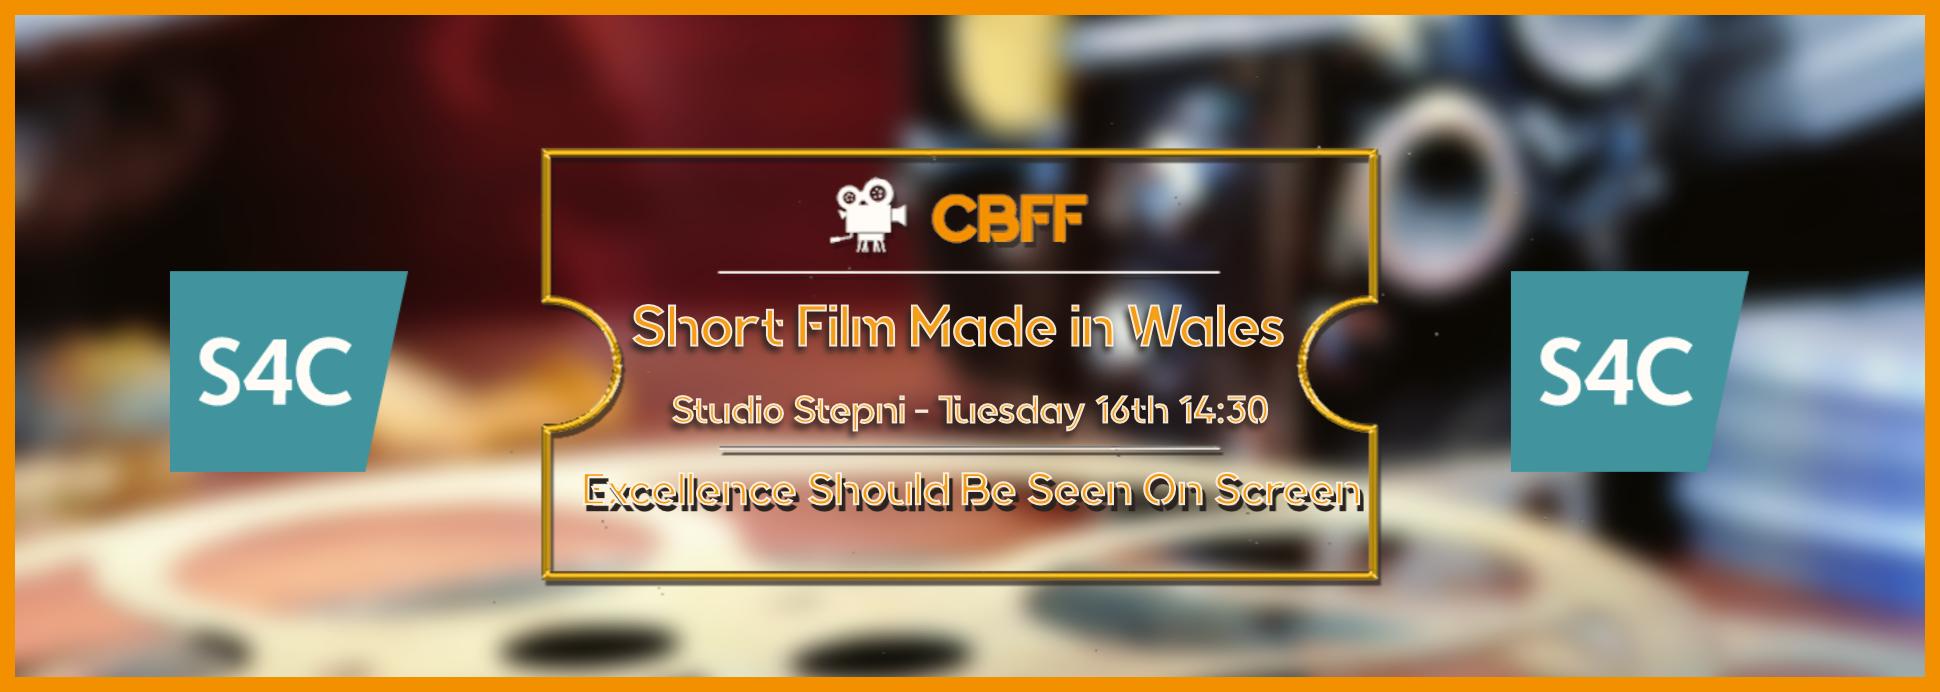 Studio Stepni Short Film Made in Wales 16th 14:30